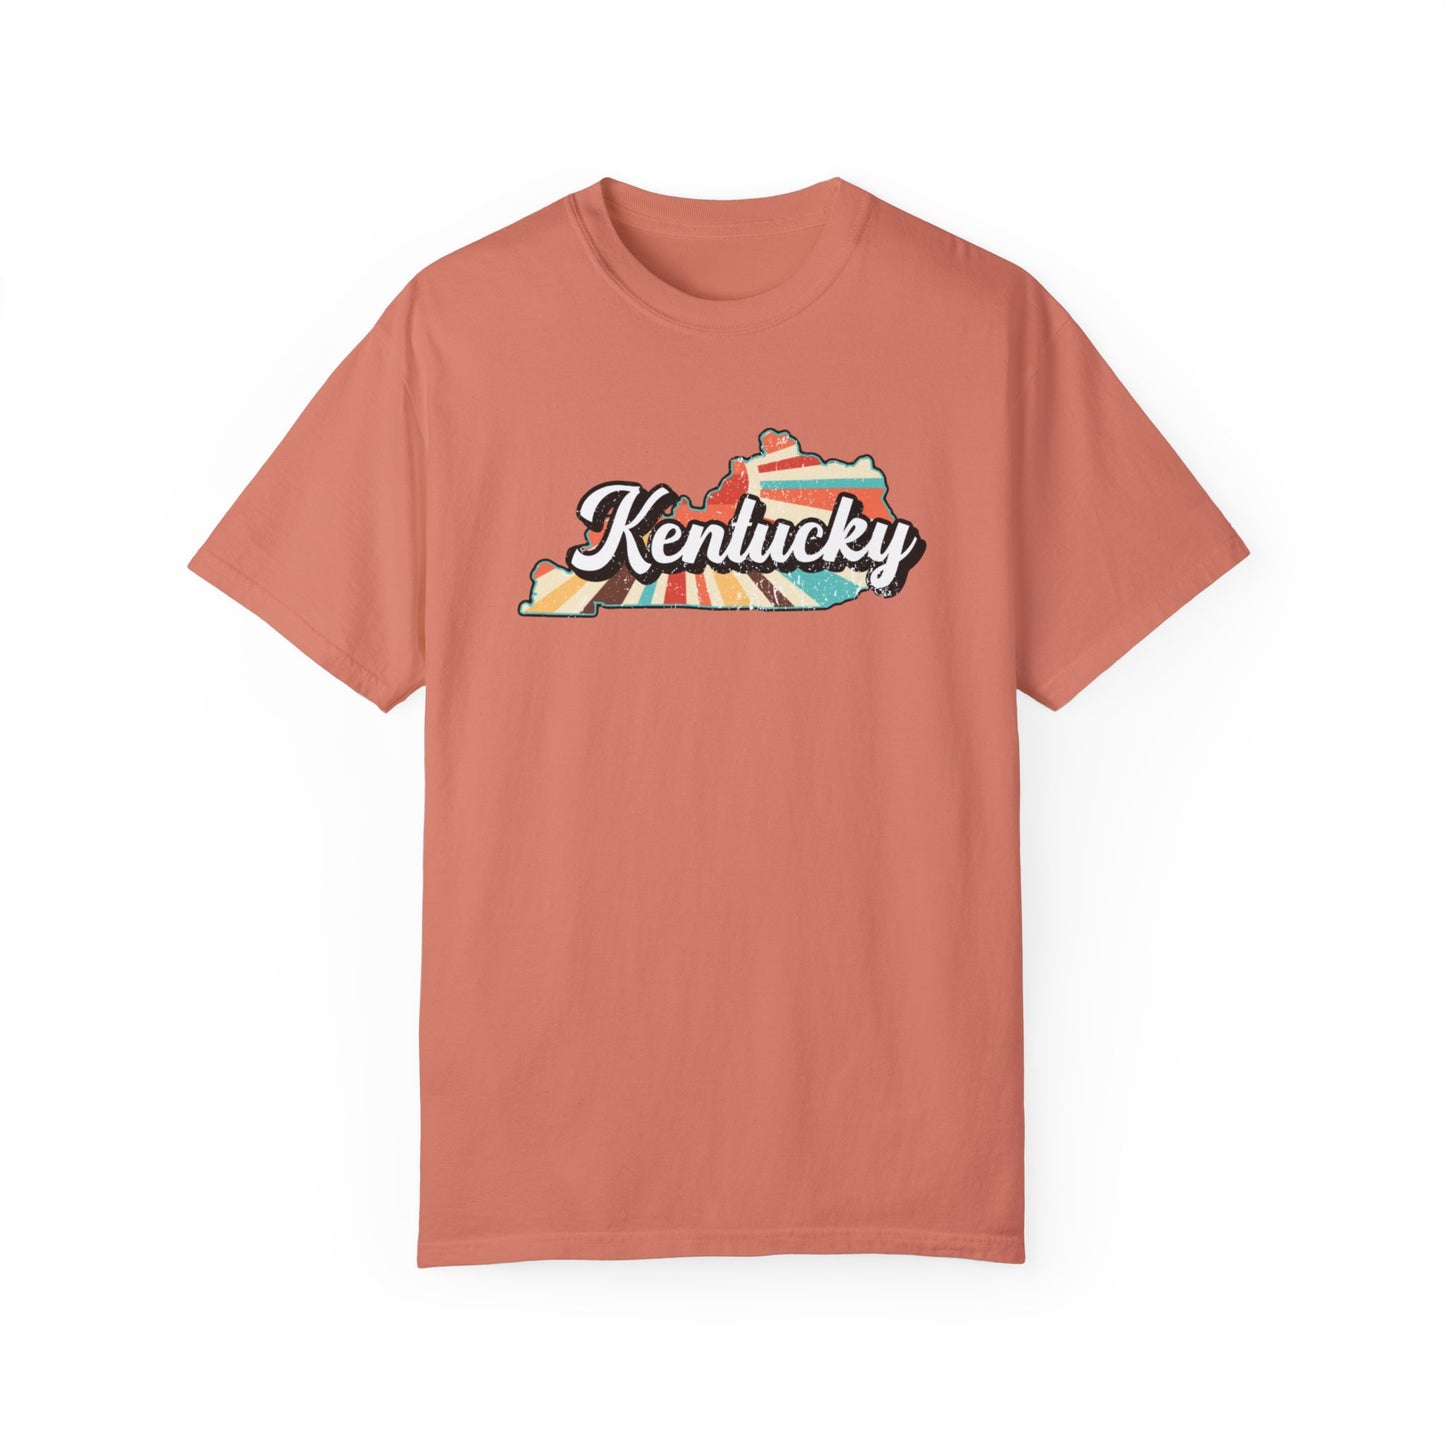 Retro Kentucky Comfort Colors Tshirt